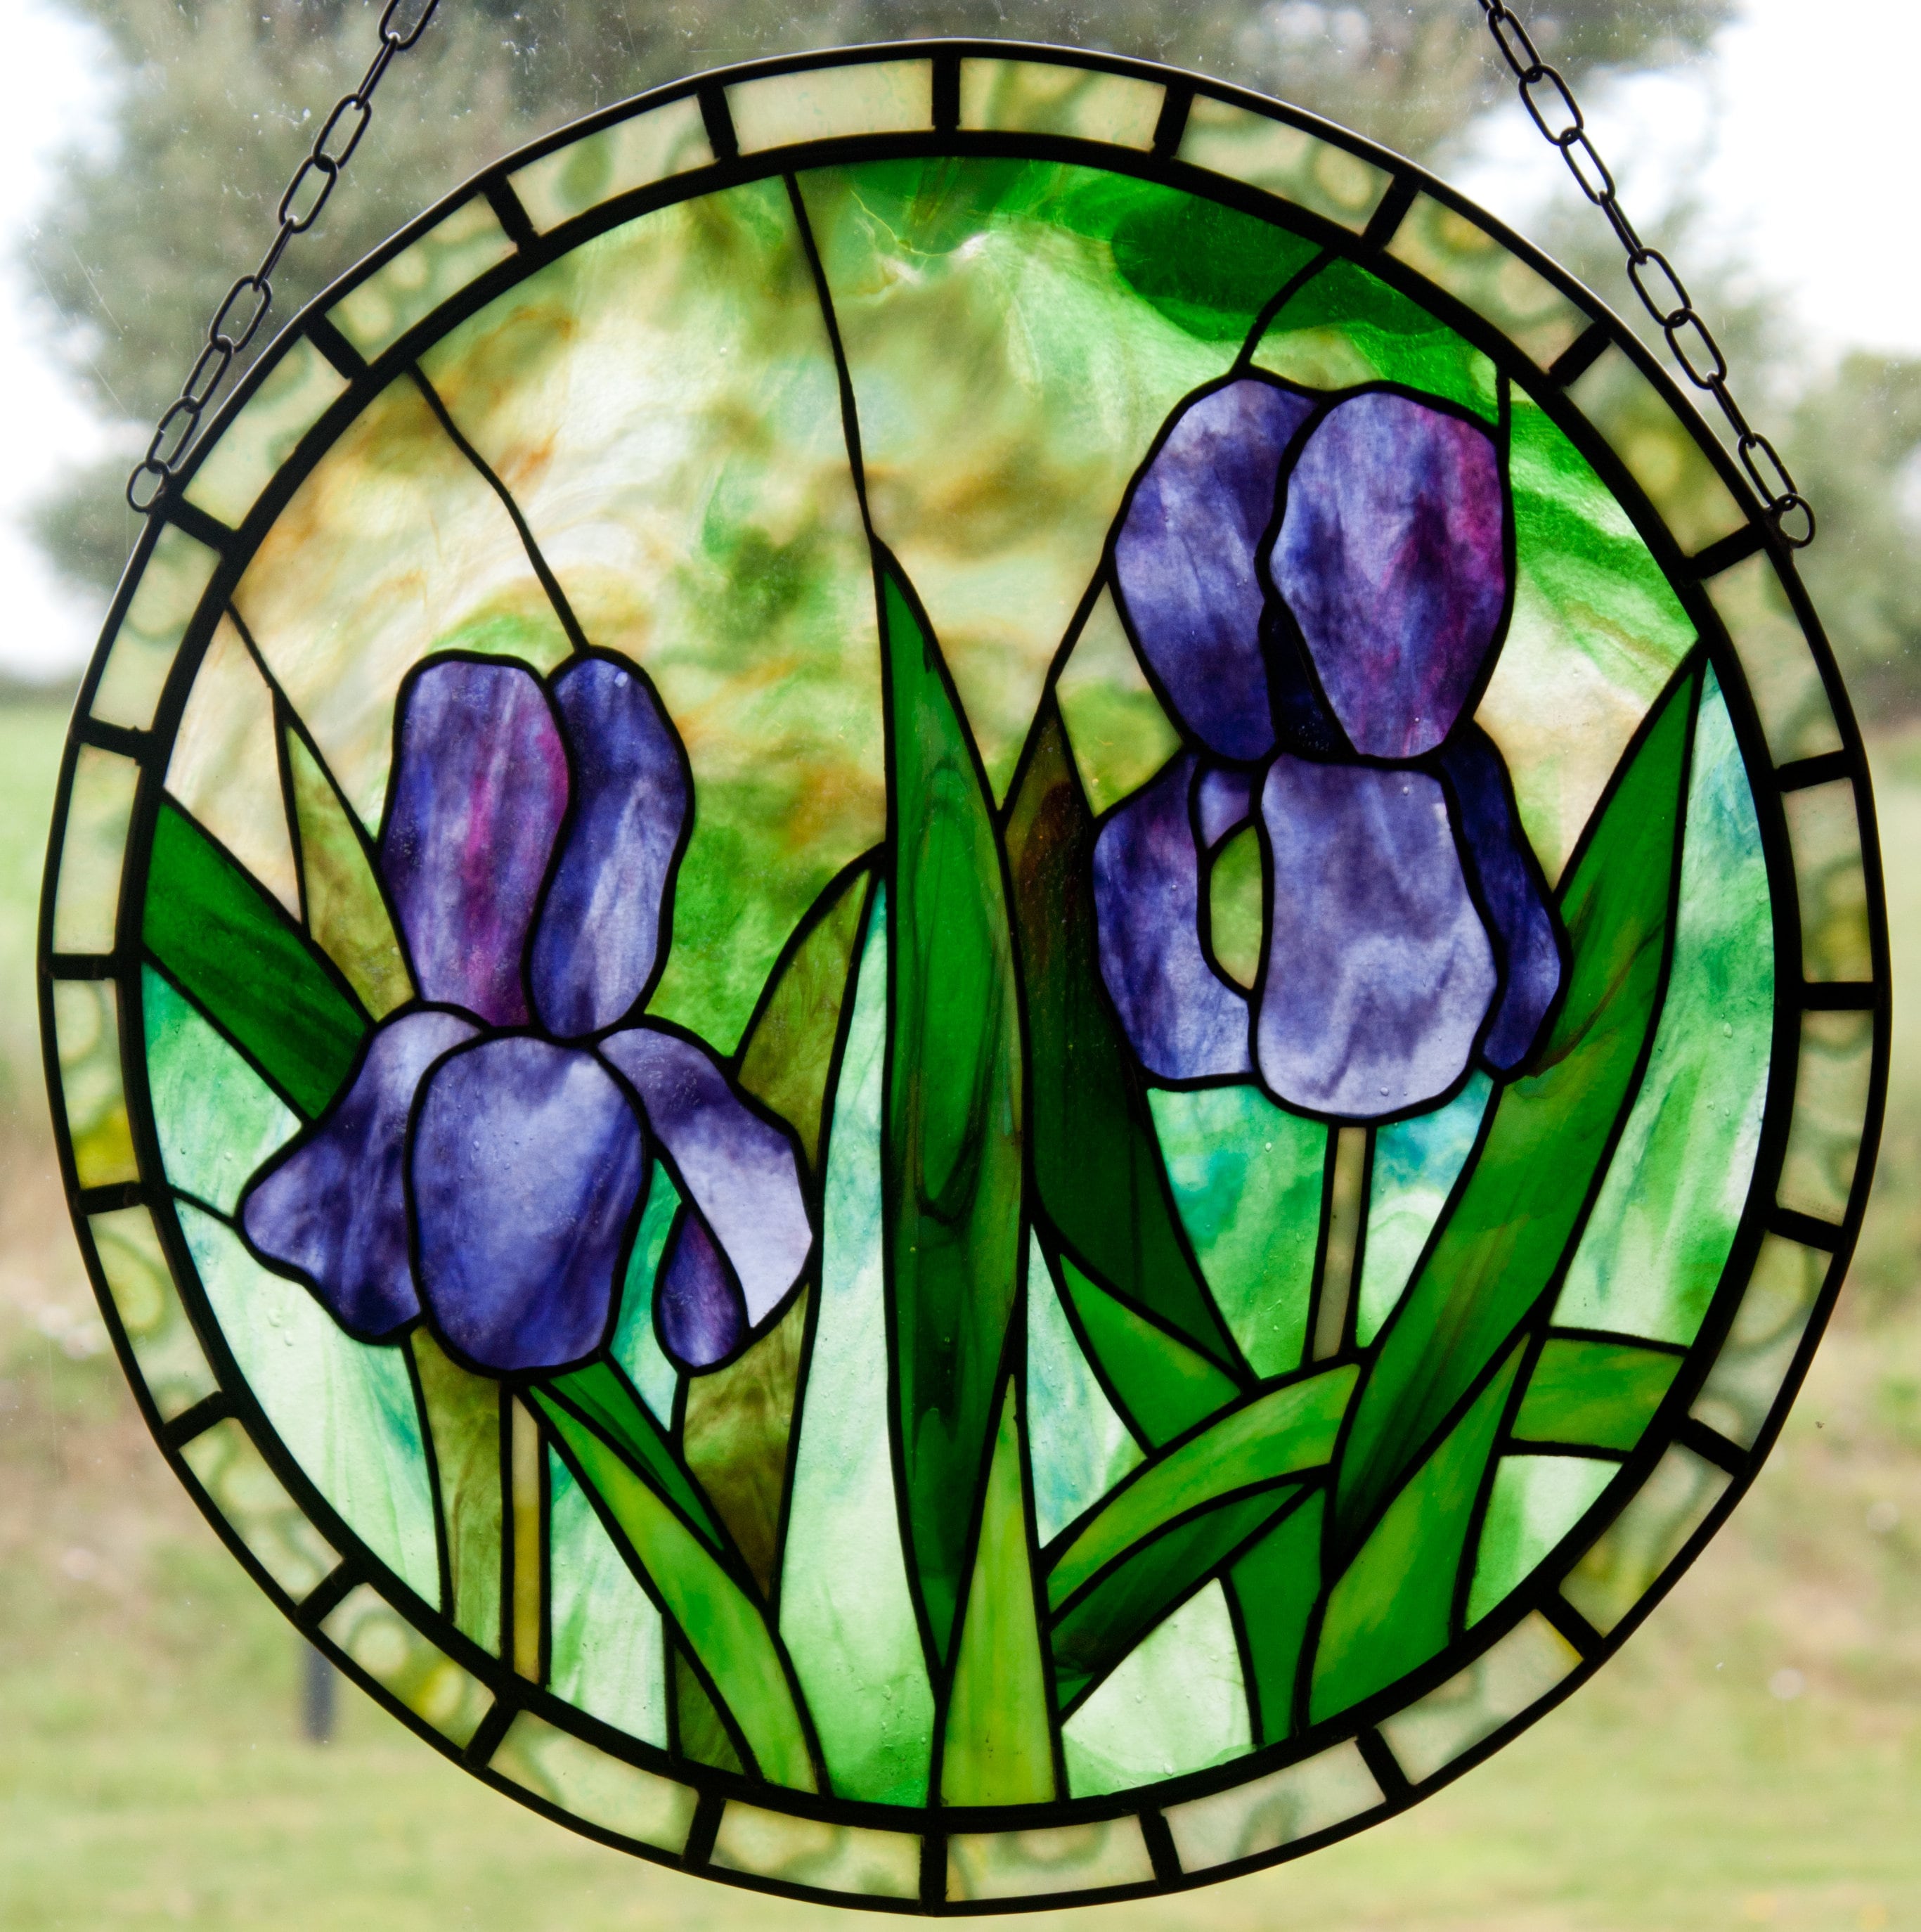 Glass Flowers - Iris